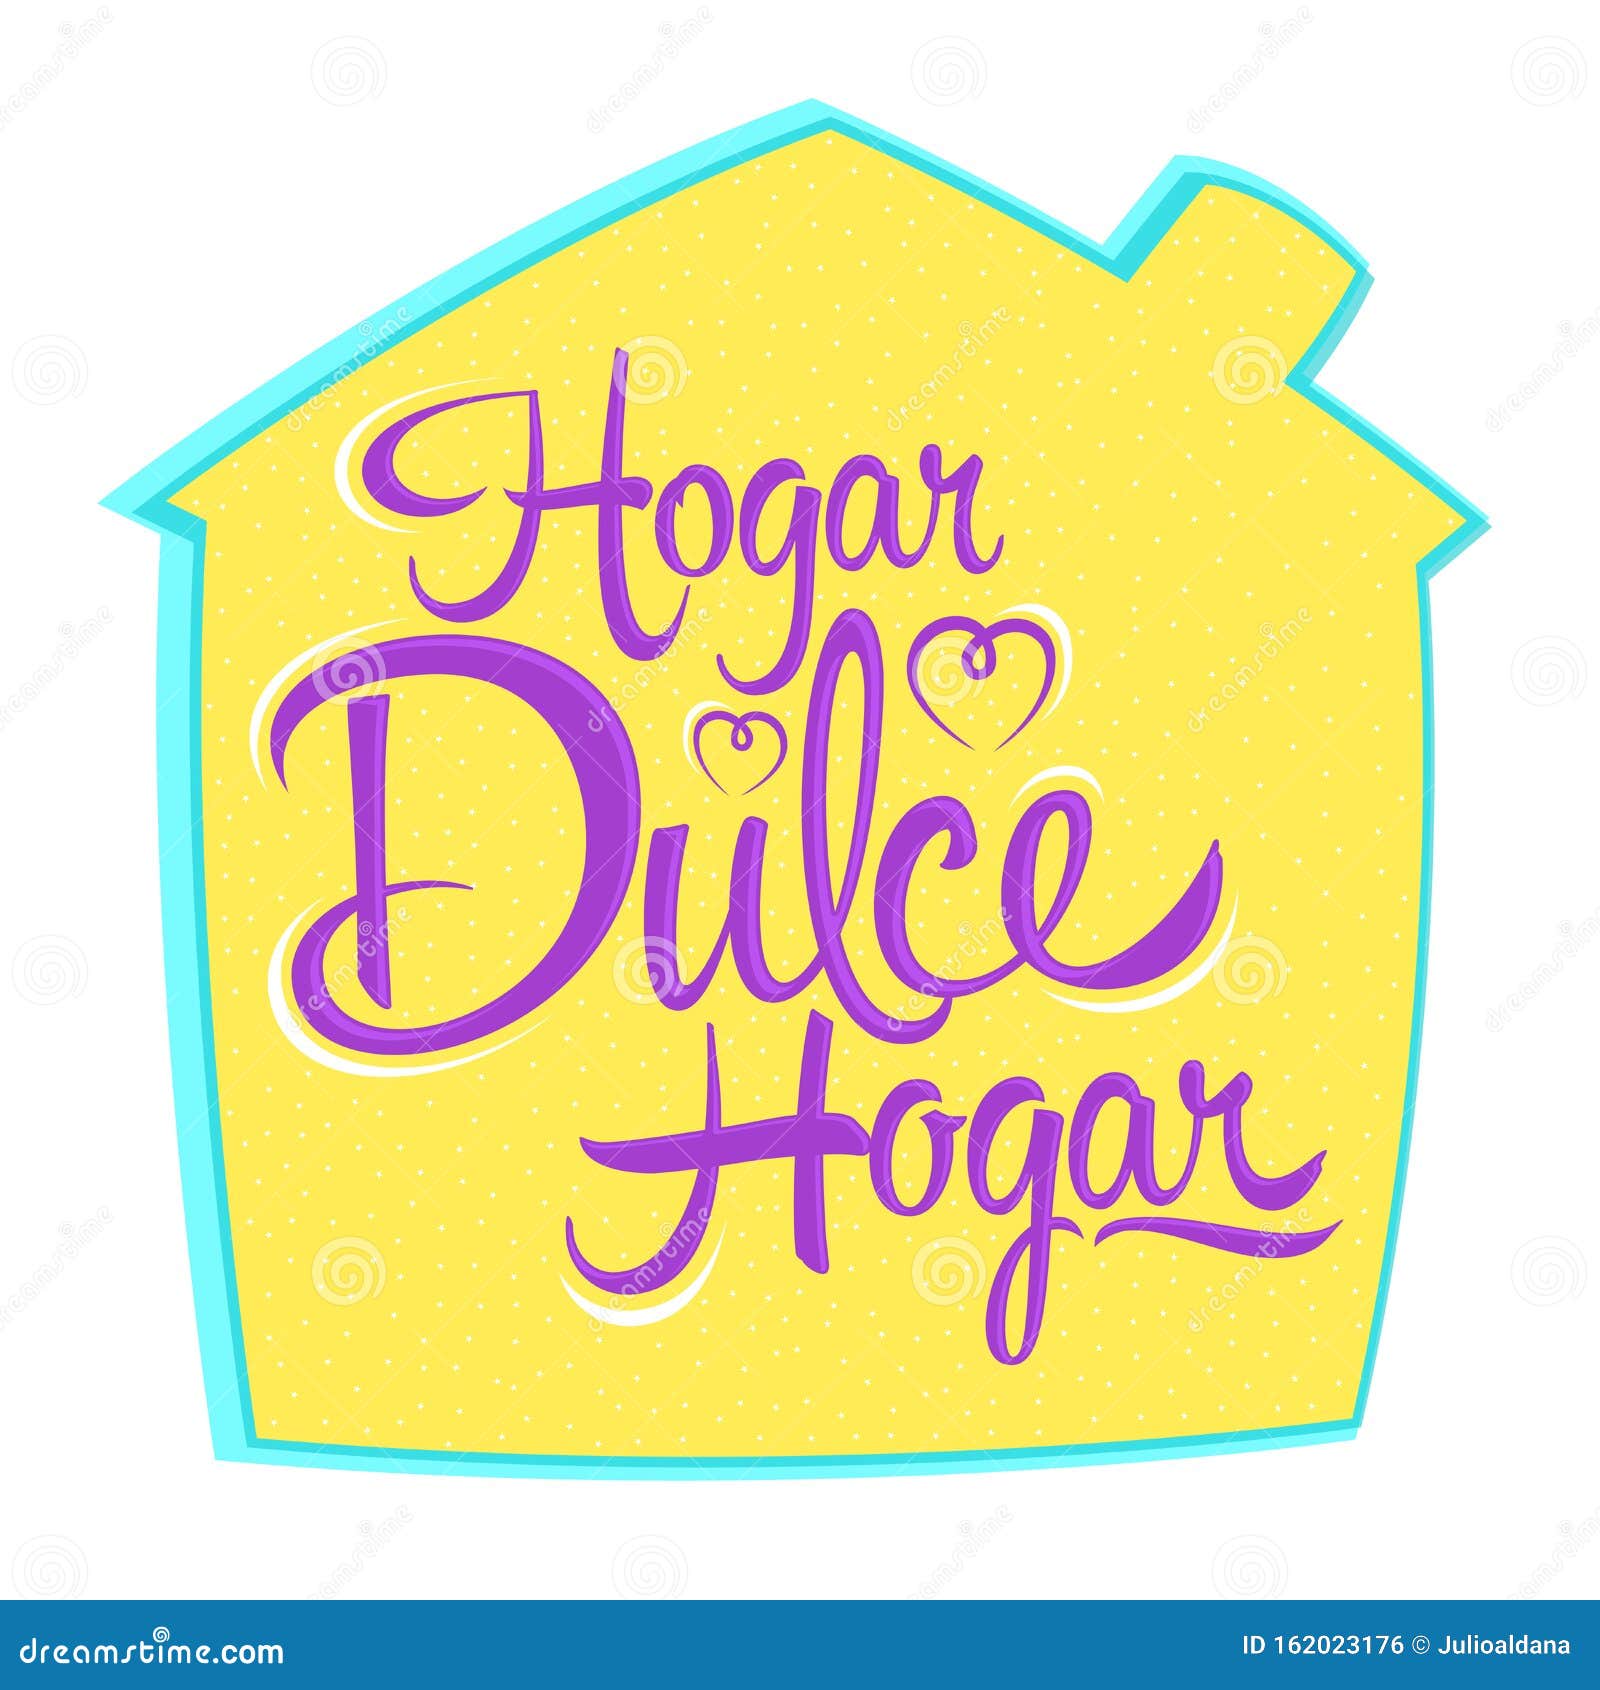 hogar dulce hogar, home sweet home spanish text,  lettering.